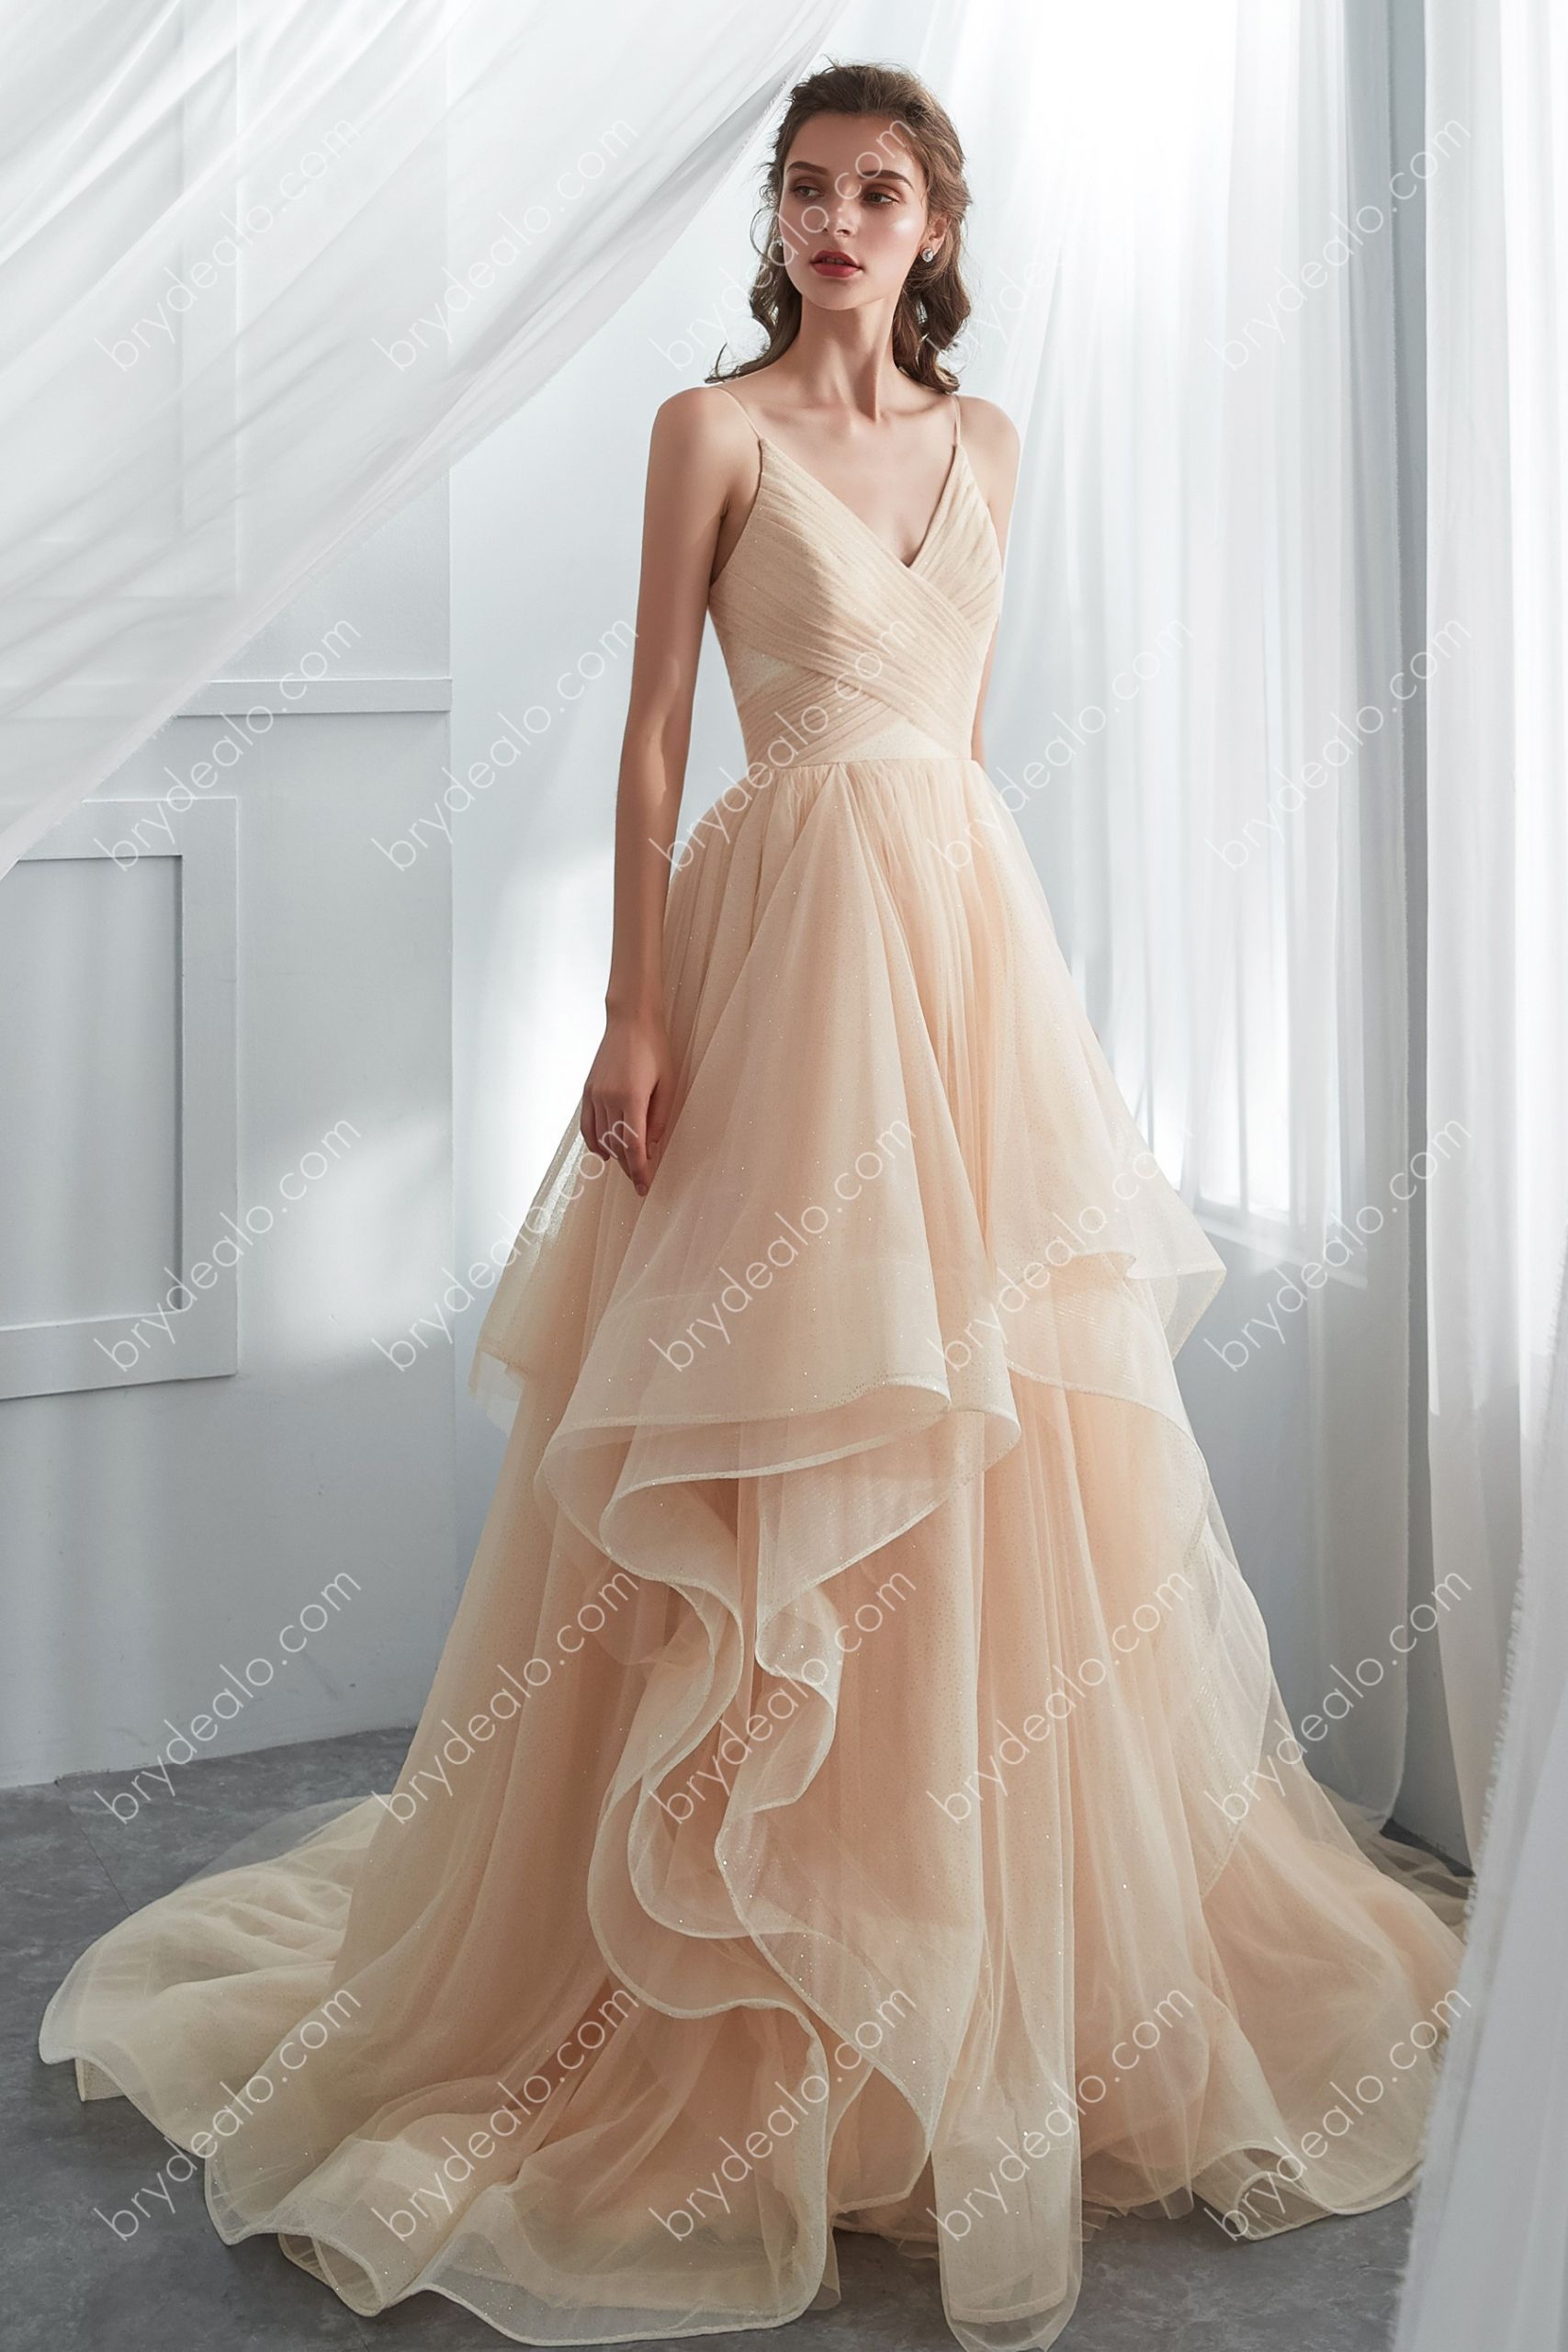 Champagne Wedding Dress
 Designer Shimmer Champagne Tulle Layered Ballgown Wedding